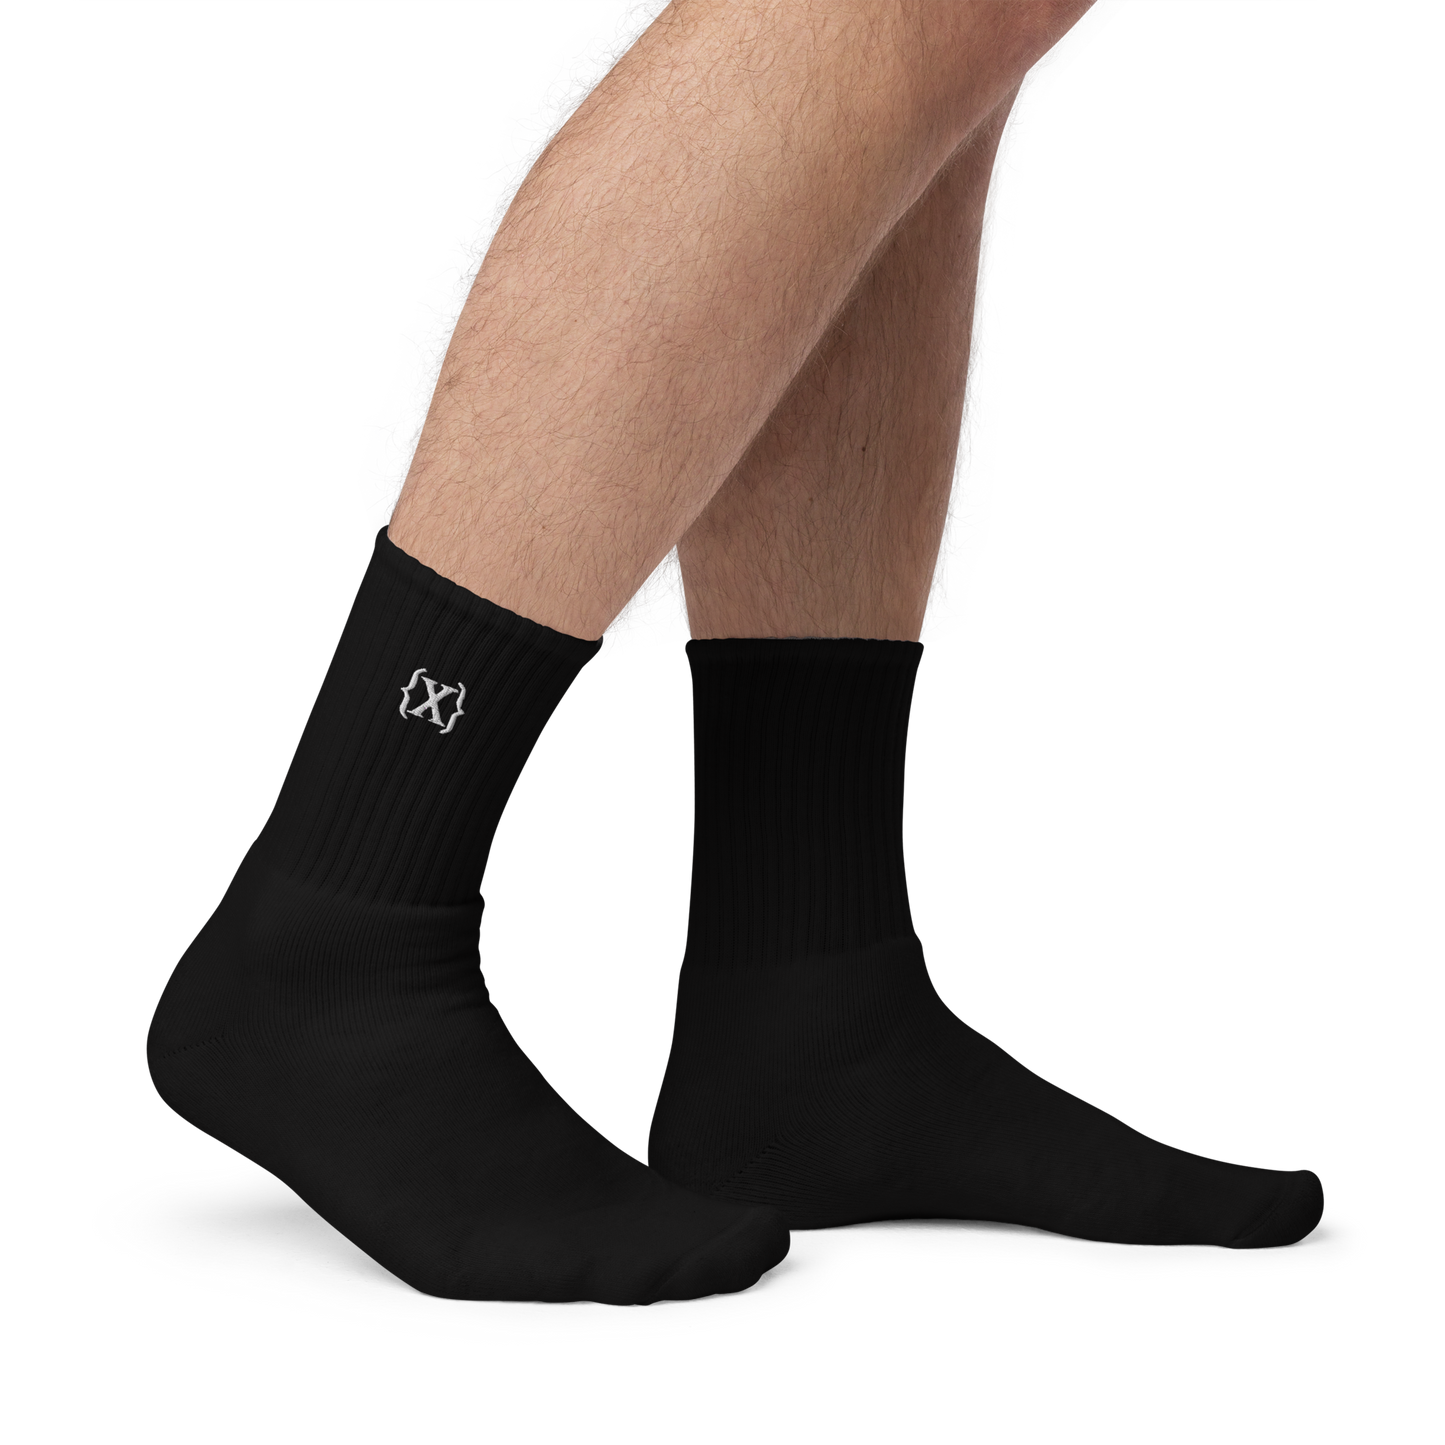 Socks - {X} Logo Embroidered Black